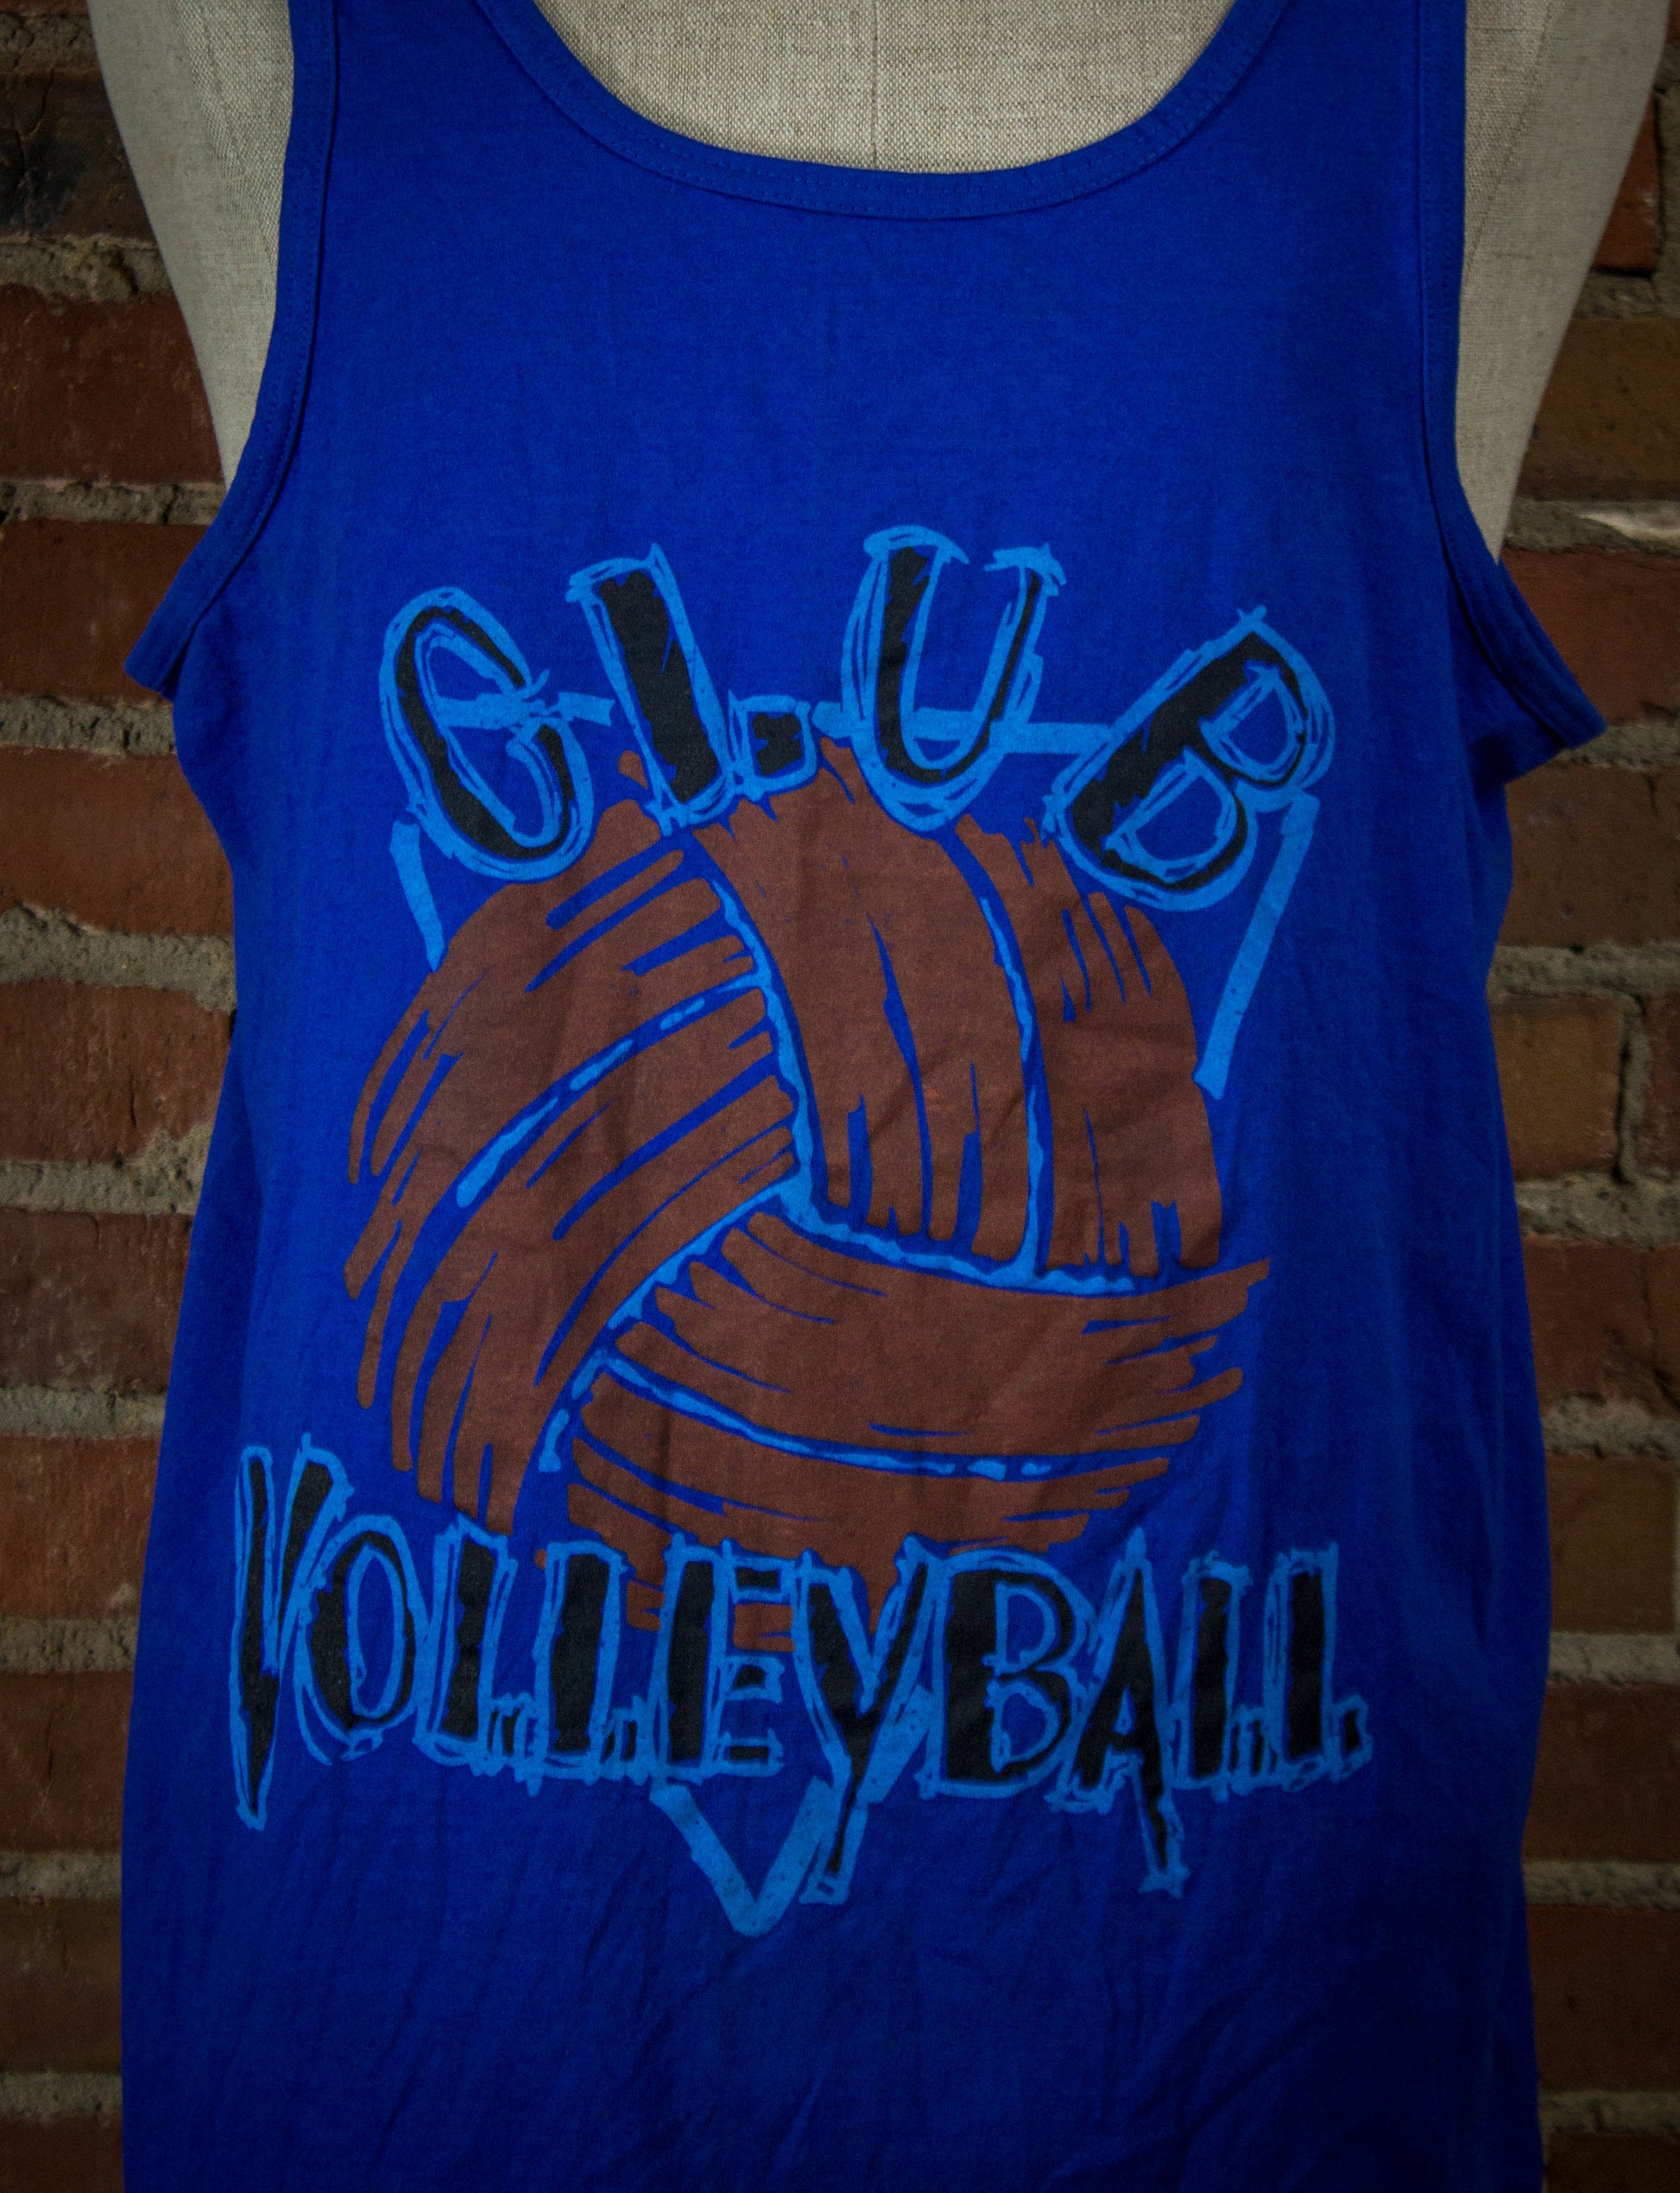 Vintage 80s Club Volleyball Blue Tank Top Unisex XL